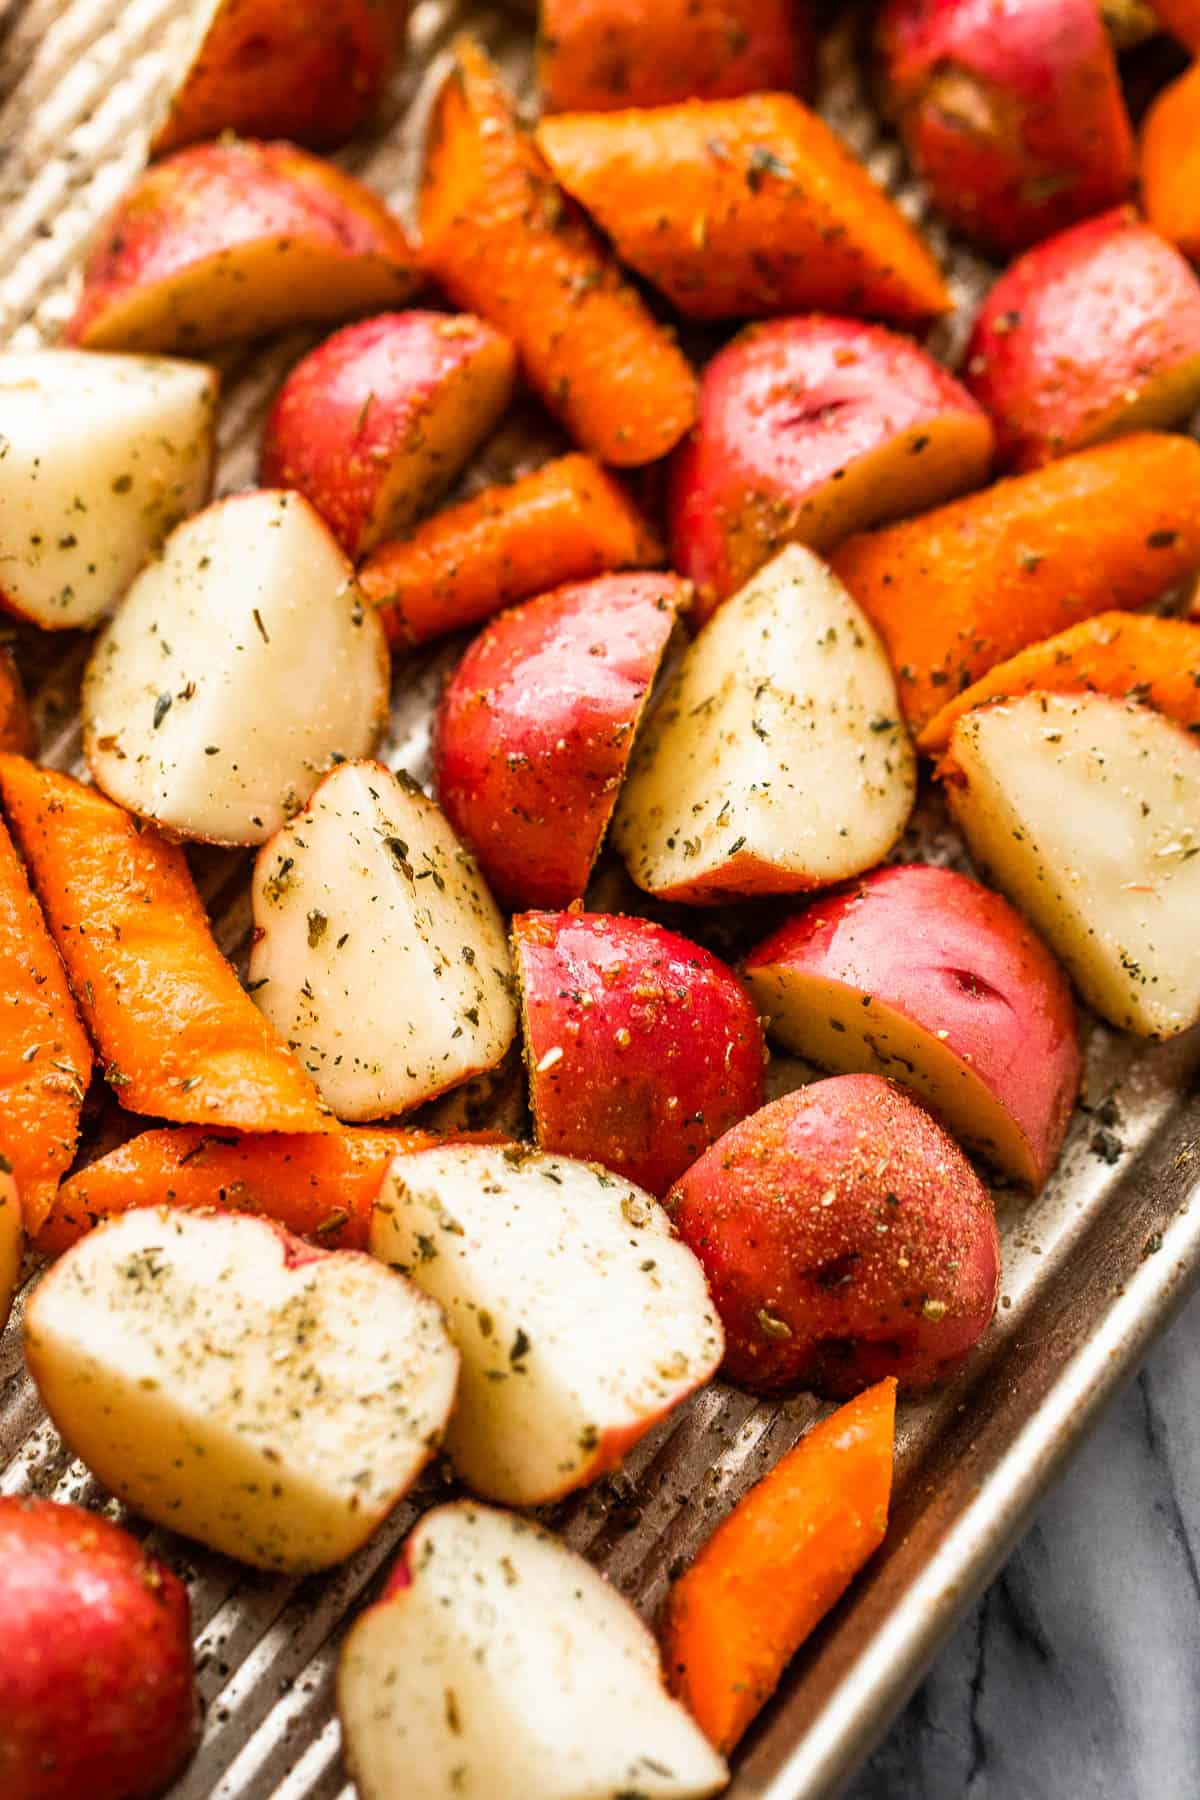 up close shot of cut up carrots and potatoes